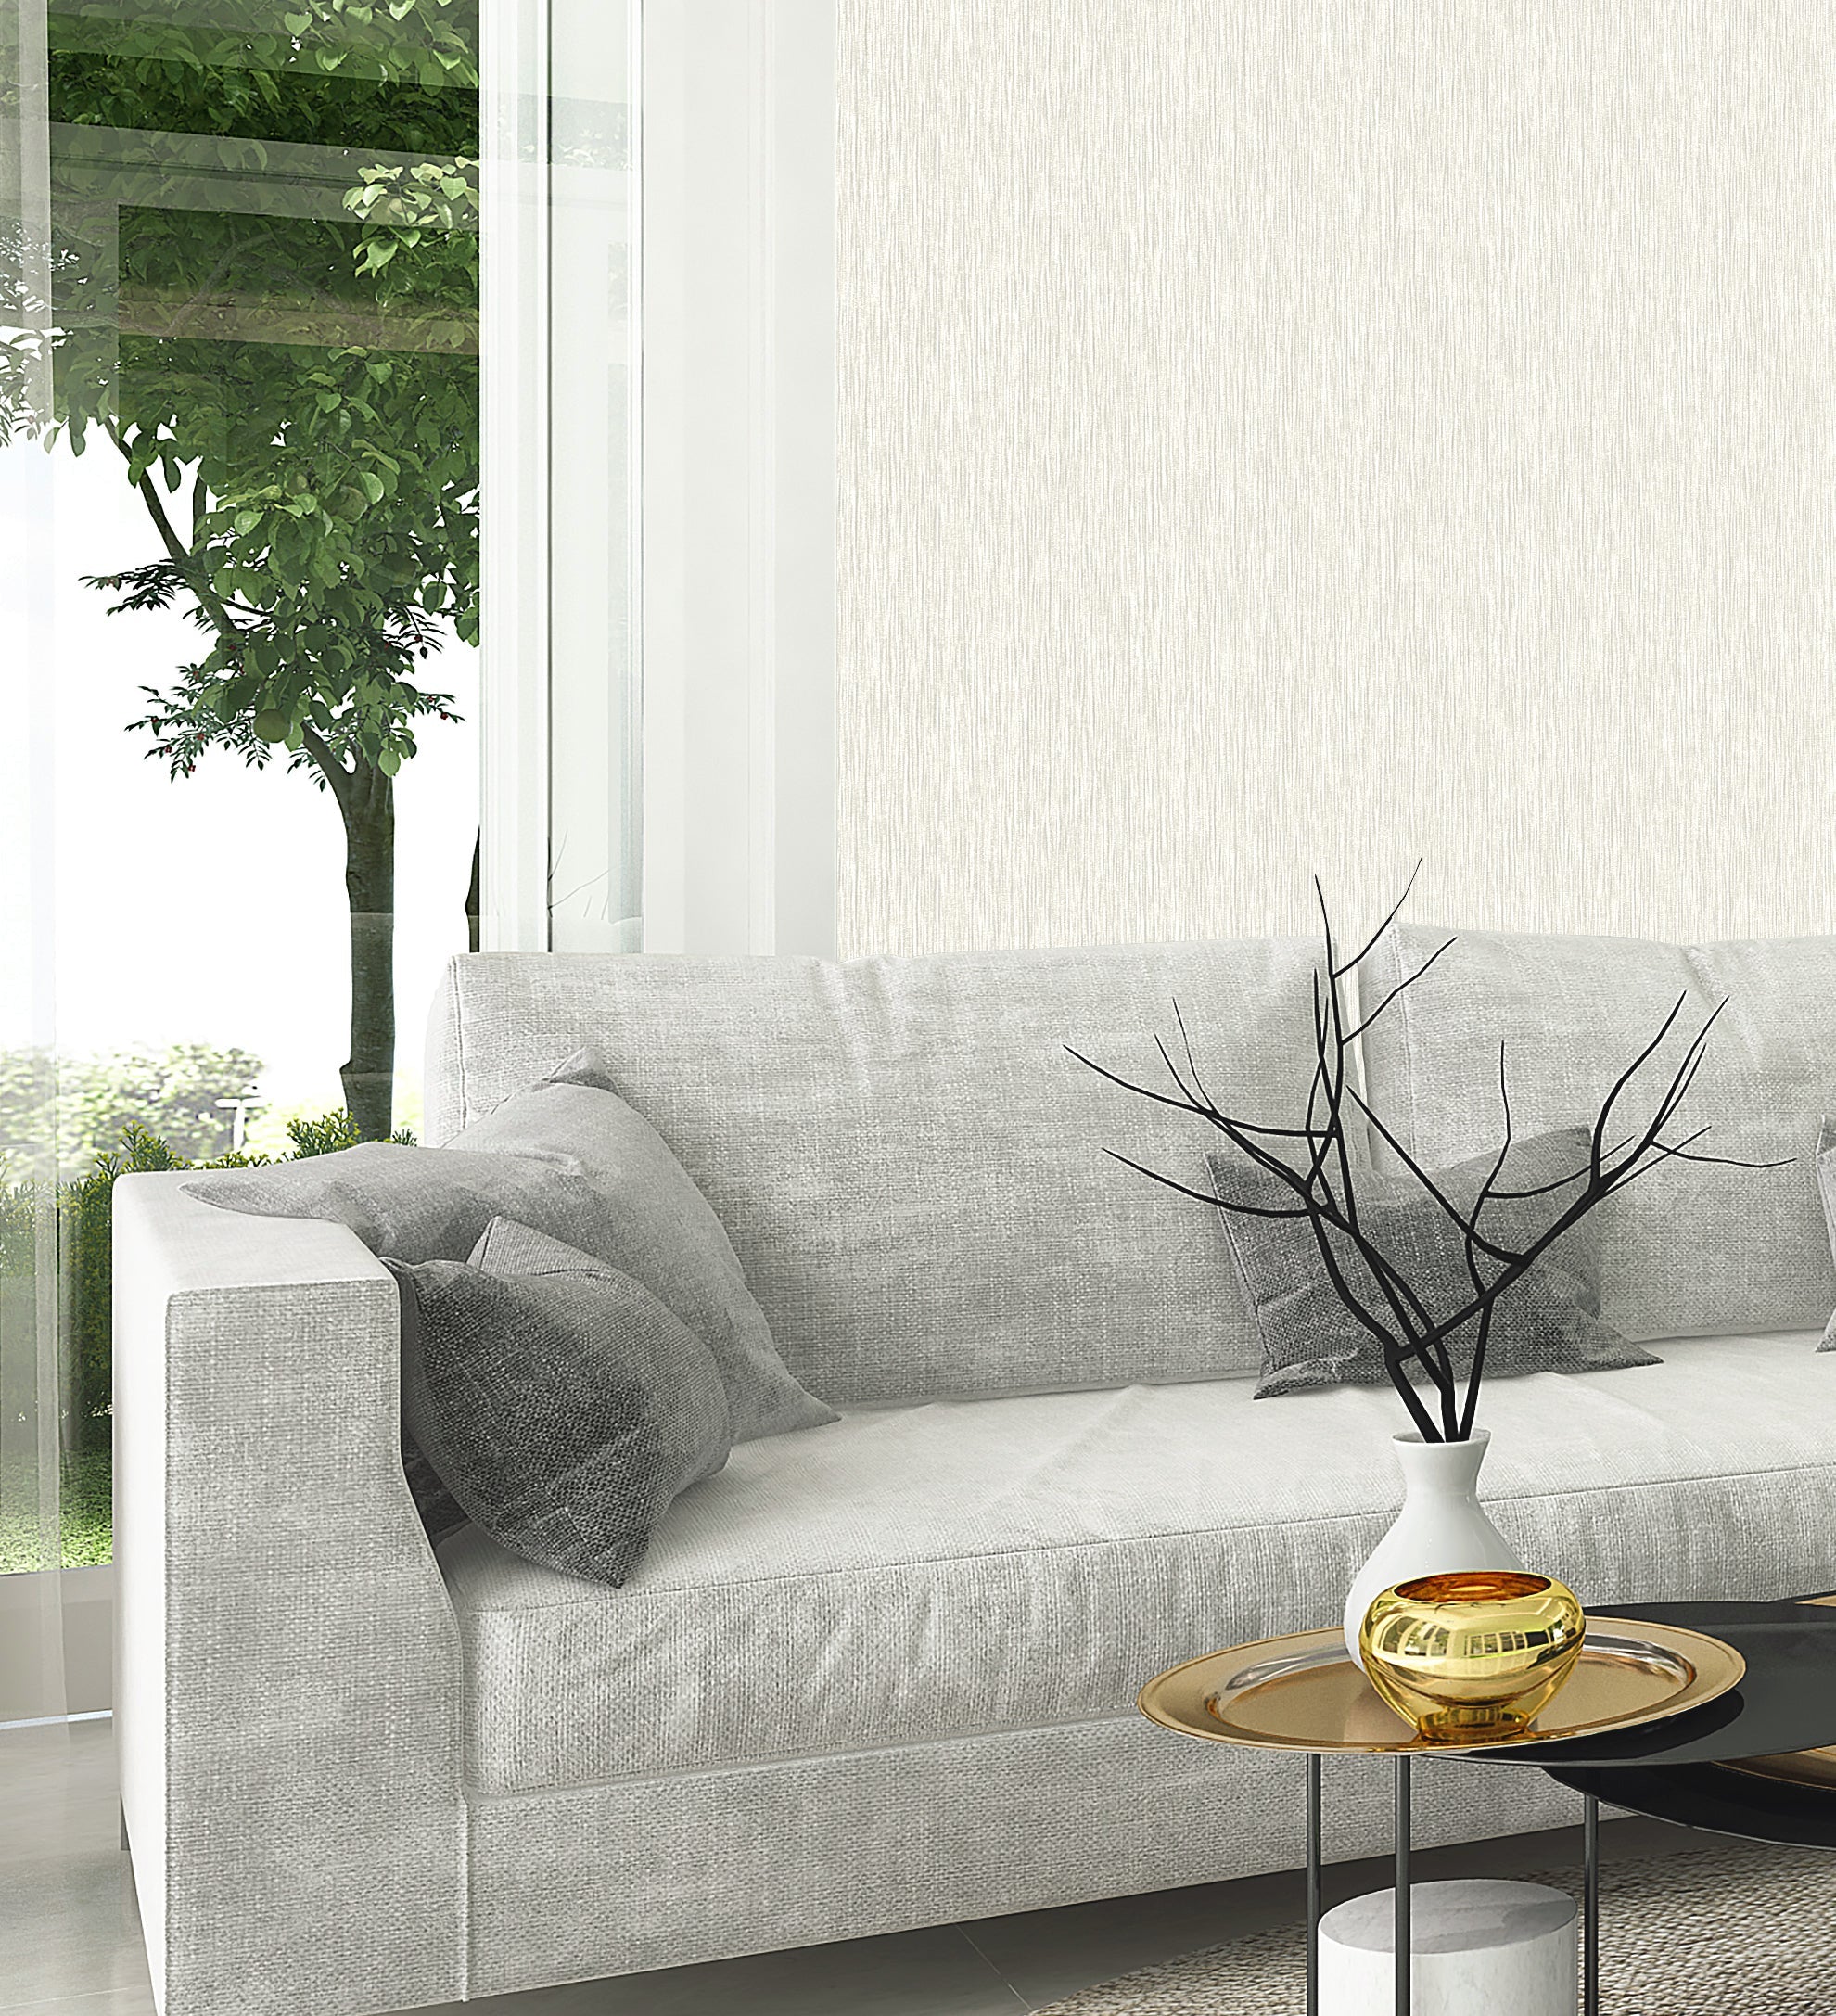 Amara Texture Cream Wallpaper | WonderWall by Nobletts | #Variant SKU# | Belgravia